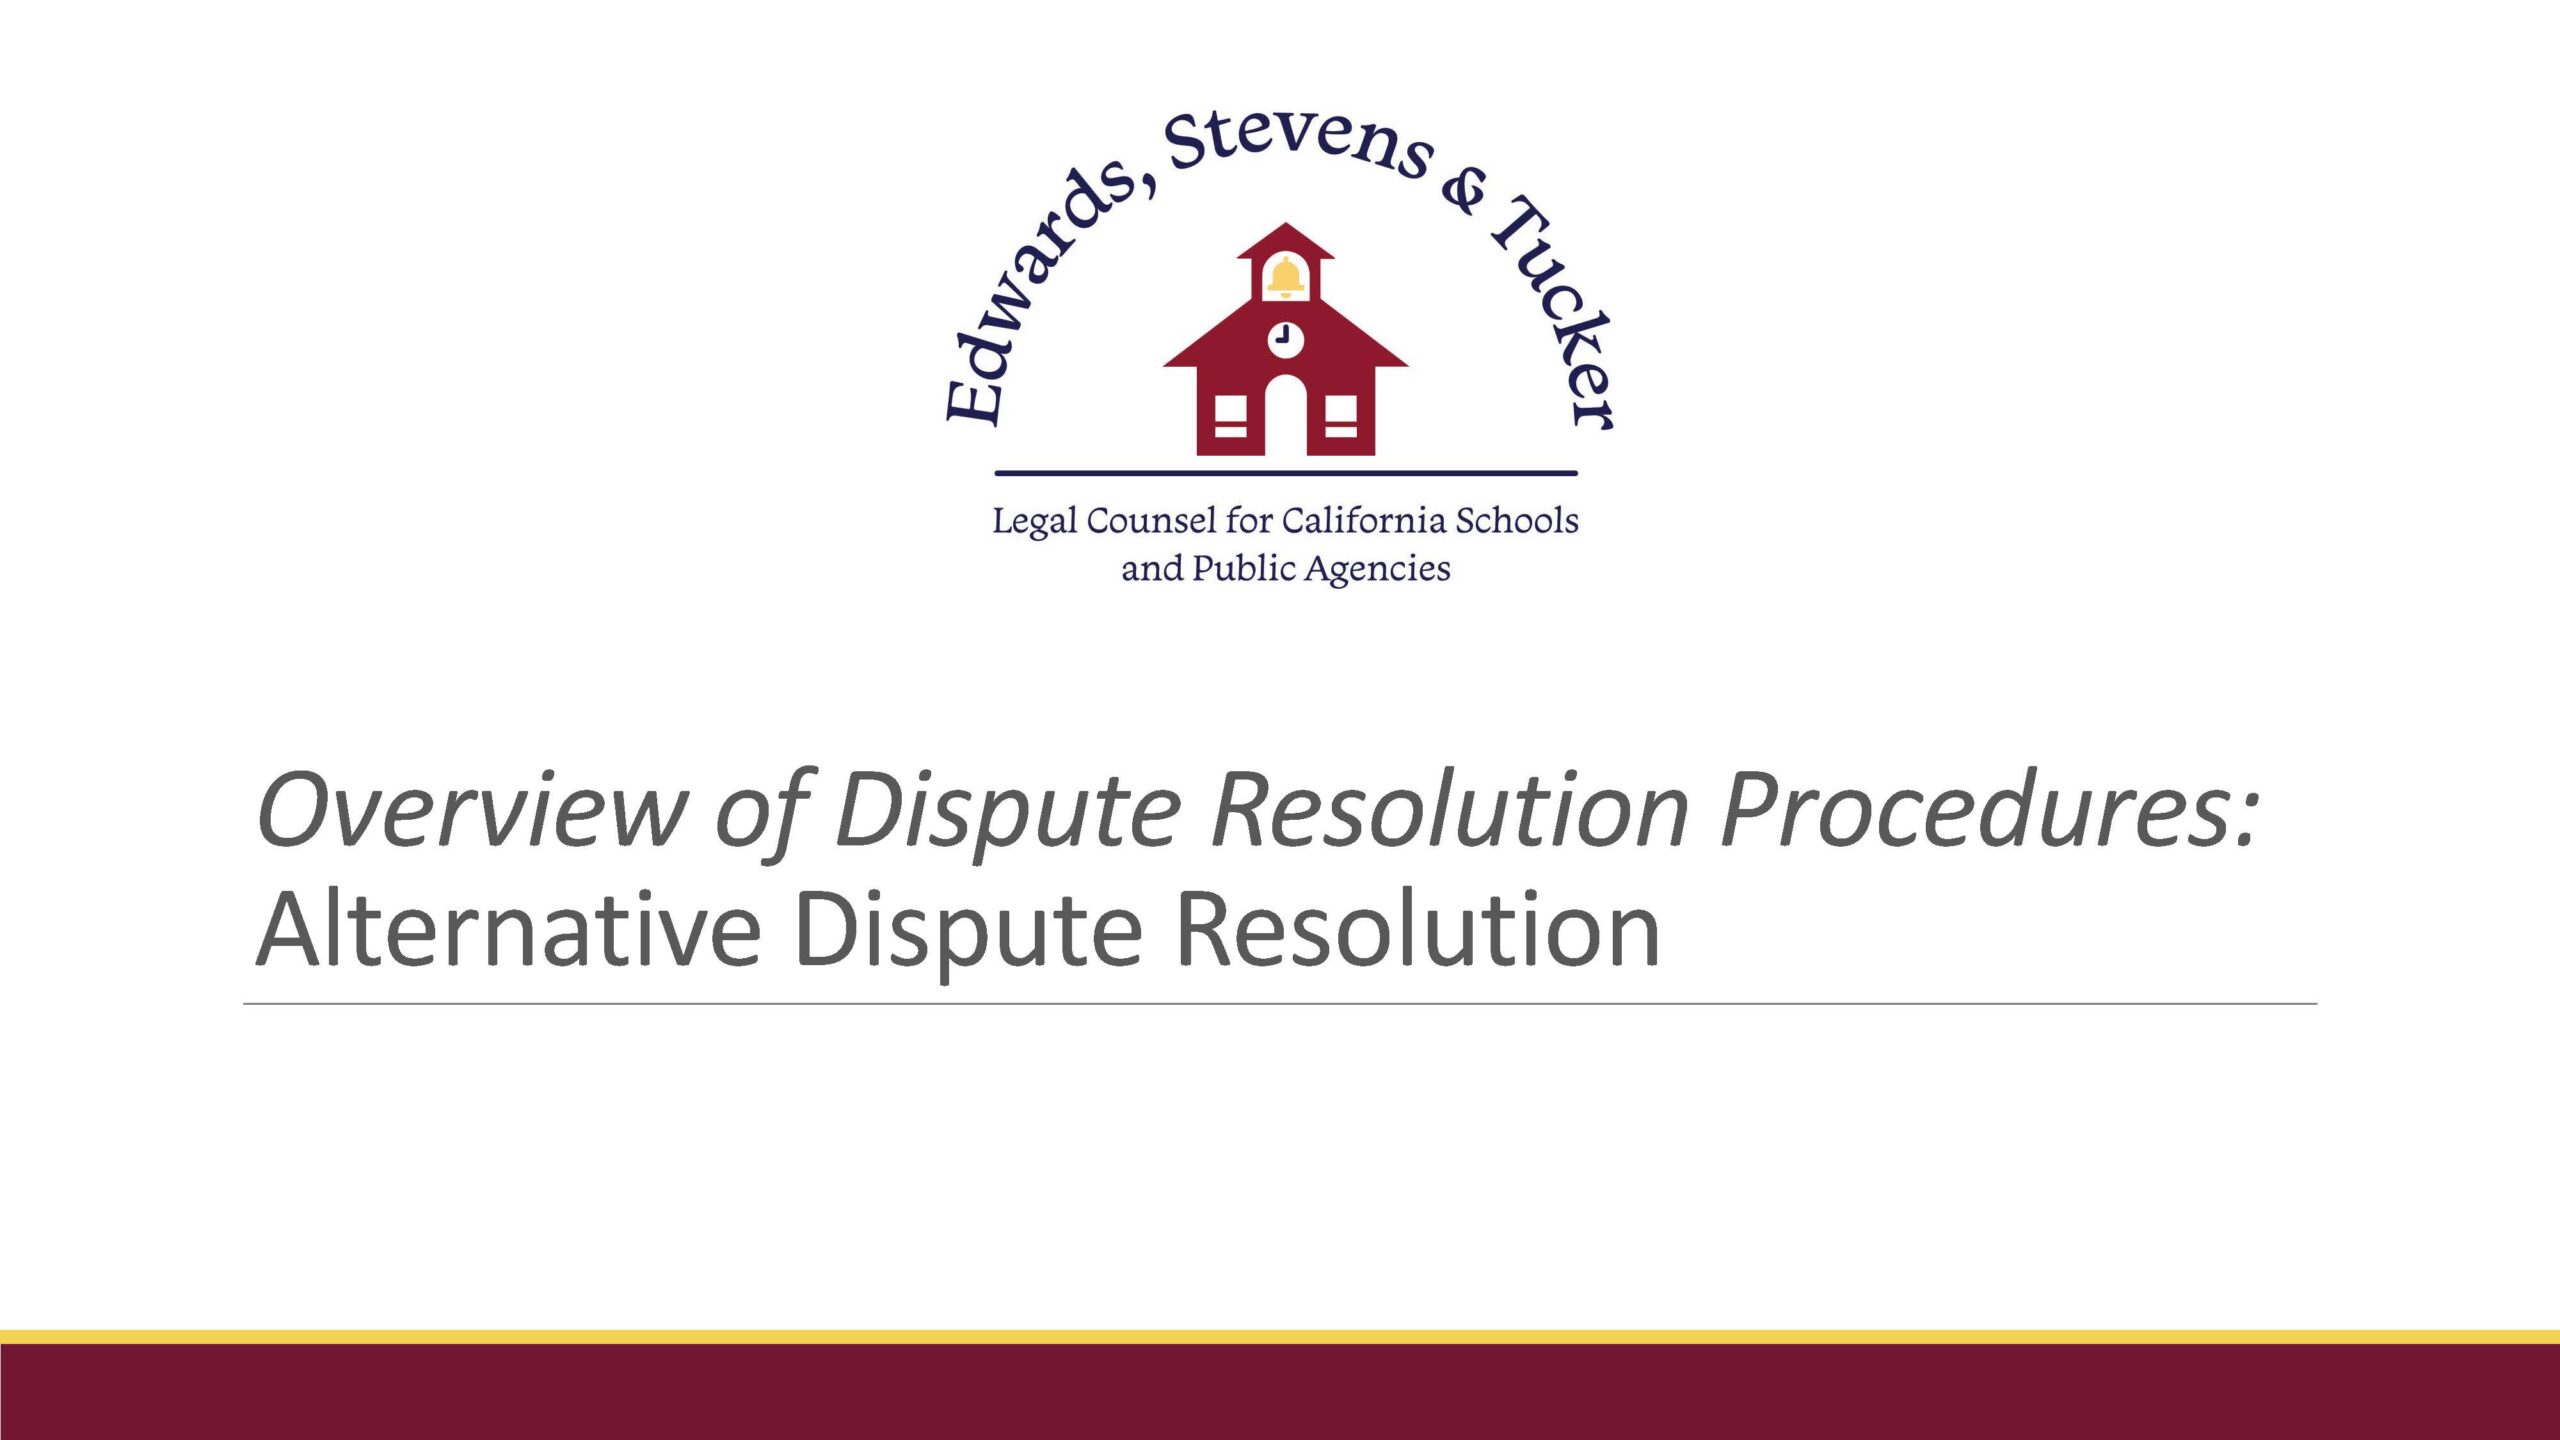 Overview of Dispute Resolution Procedures: Alternative Dispute Resolution